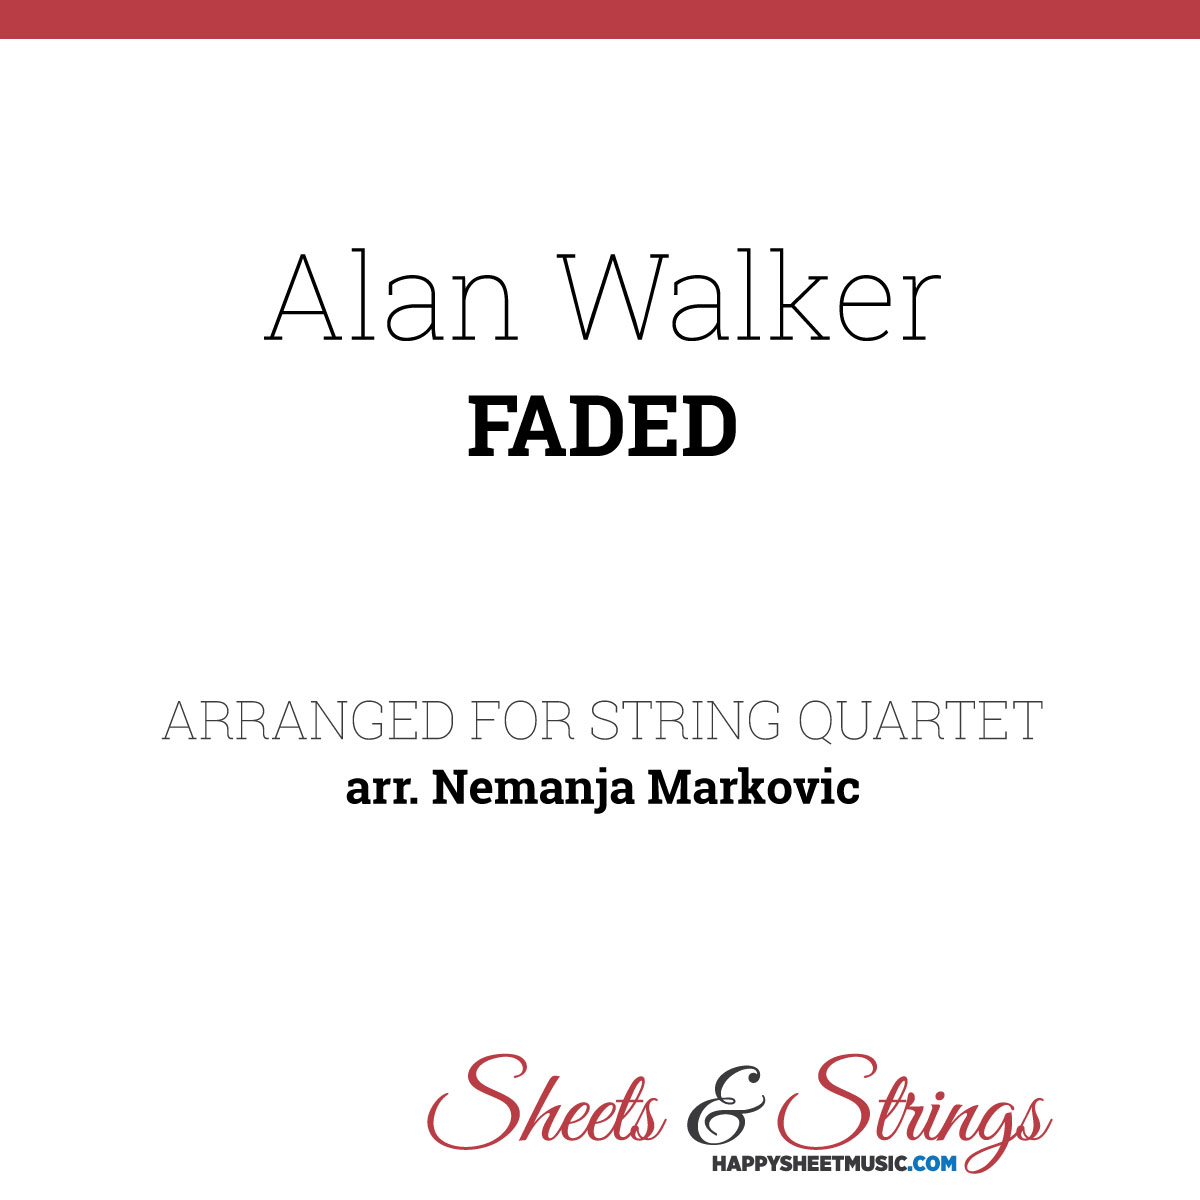 Alan Walker Faded Sheet Music For String Quartet